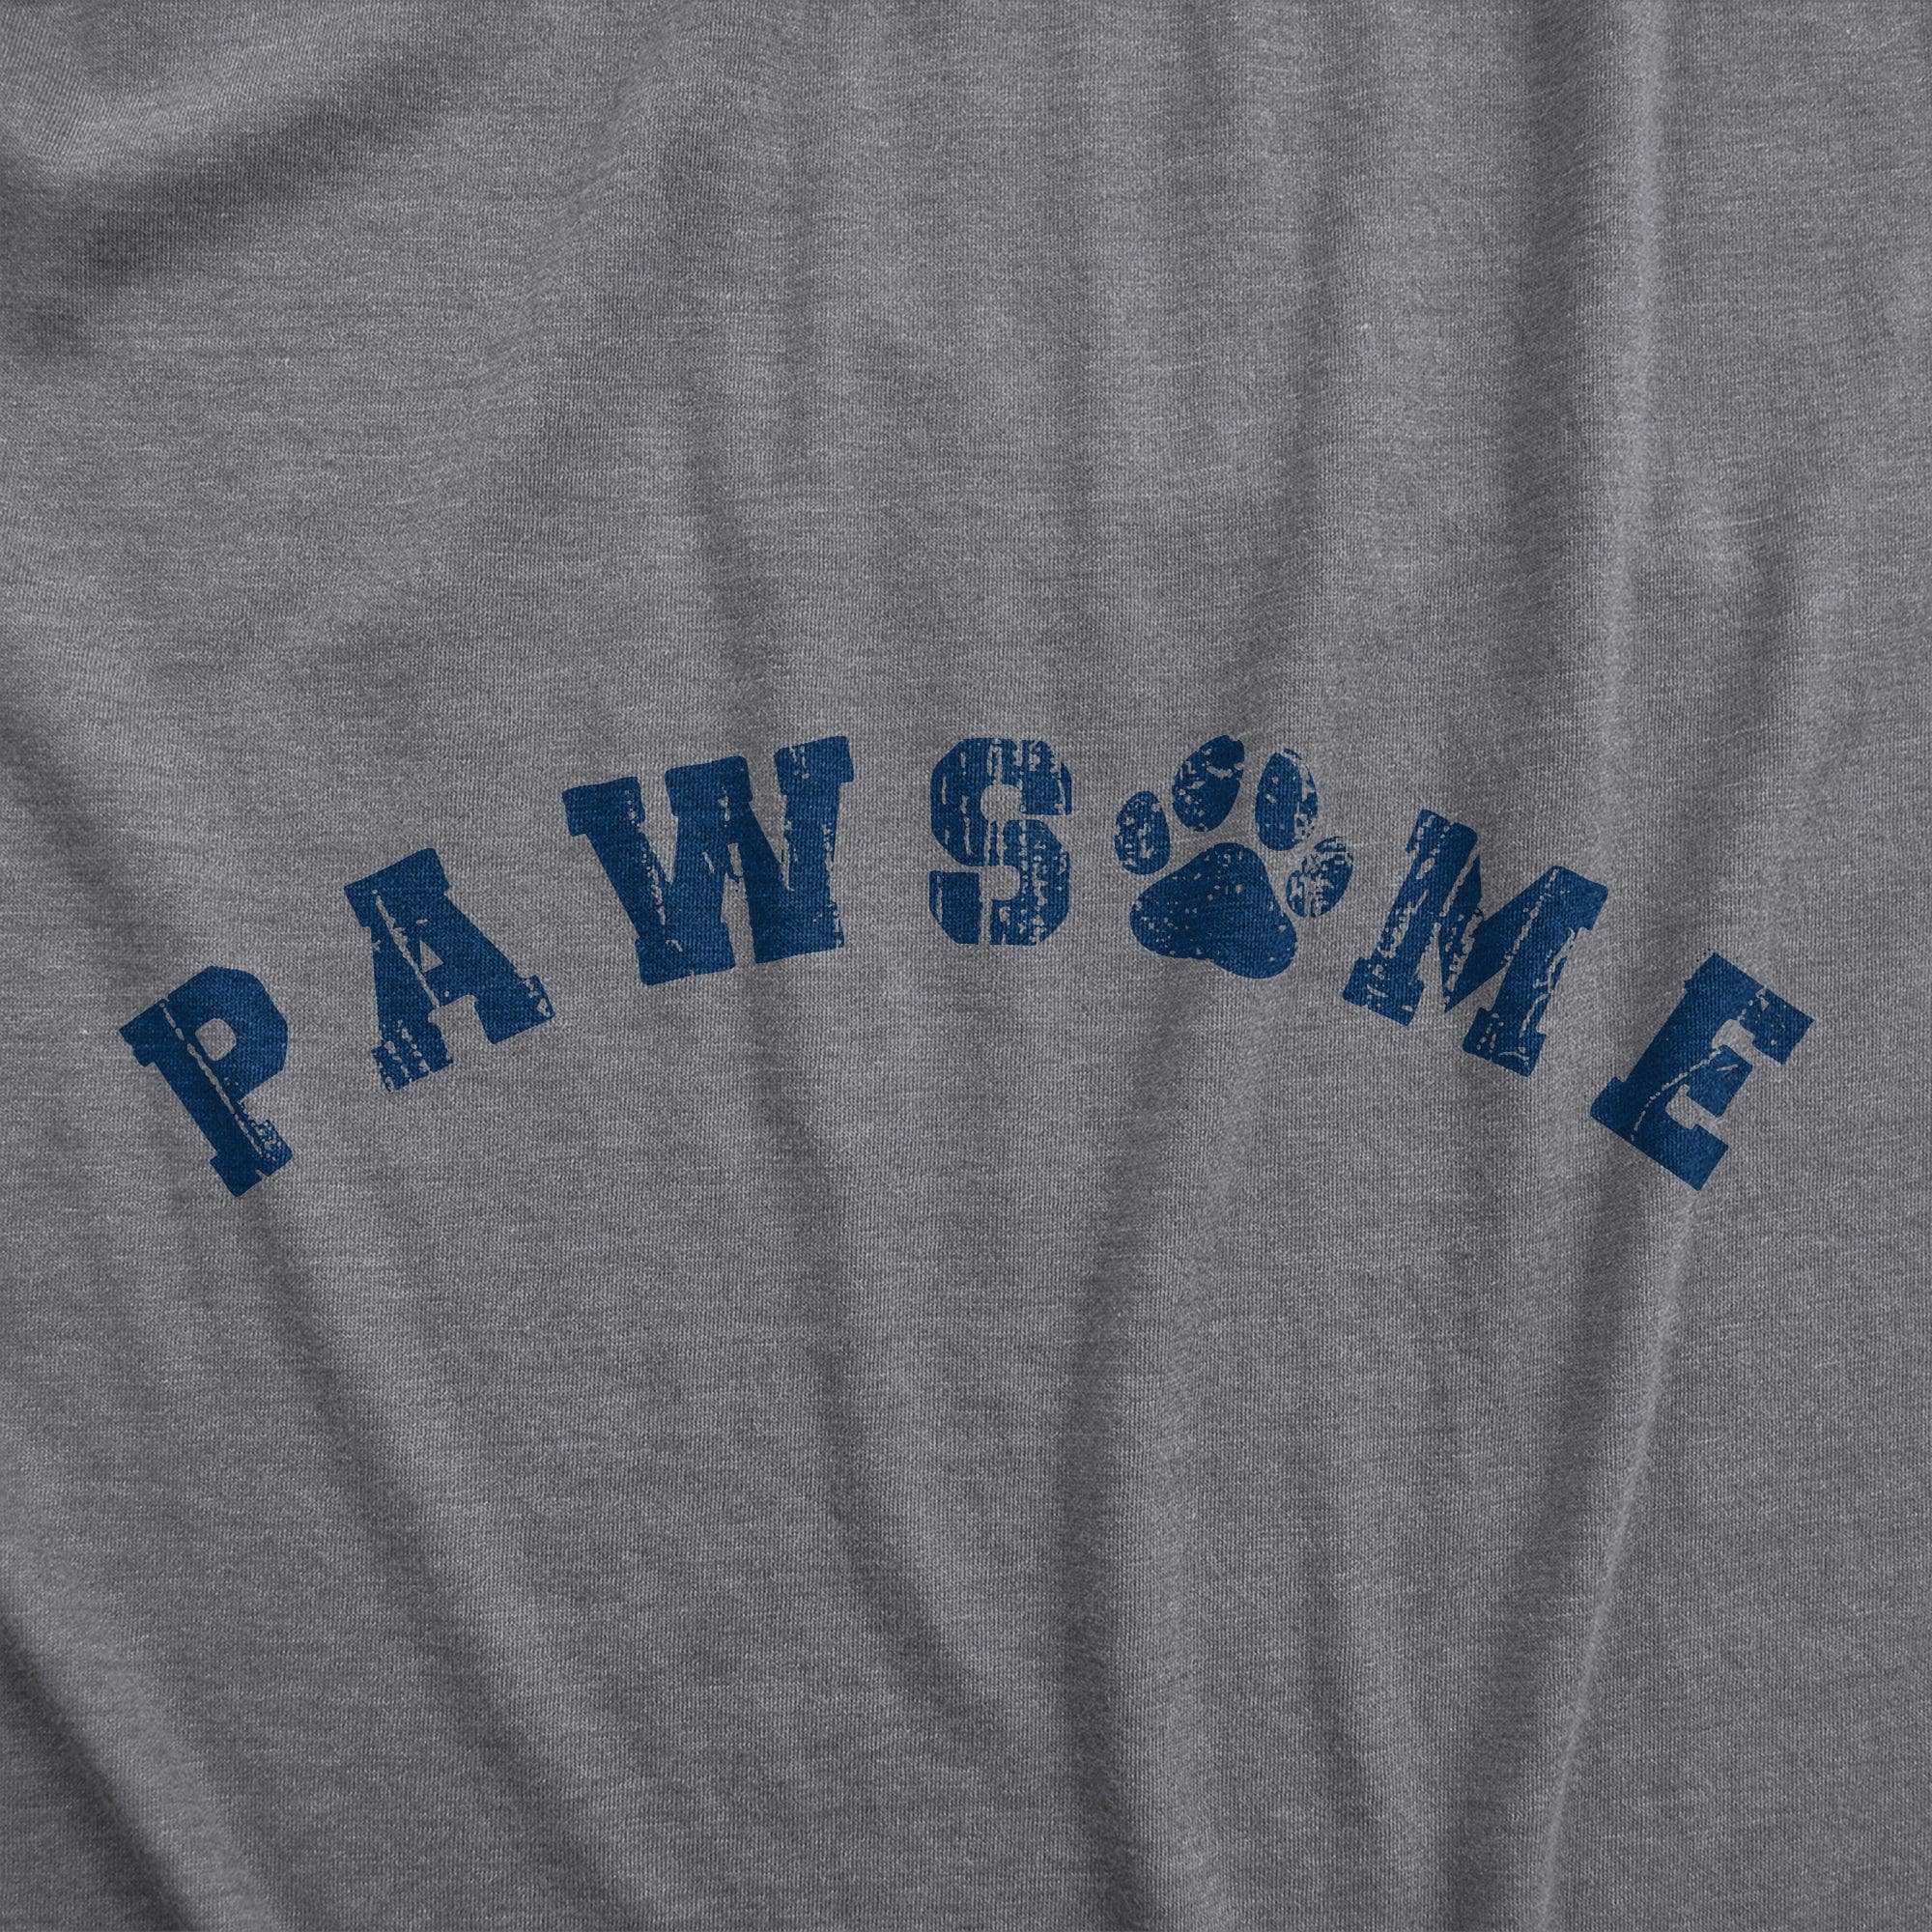 Pawsome Men's Tshirt  -  Crazy Dog T-Shirts